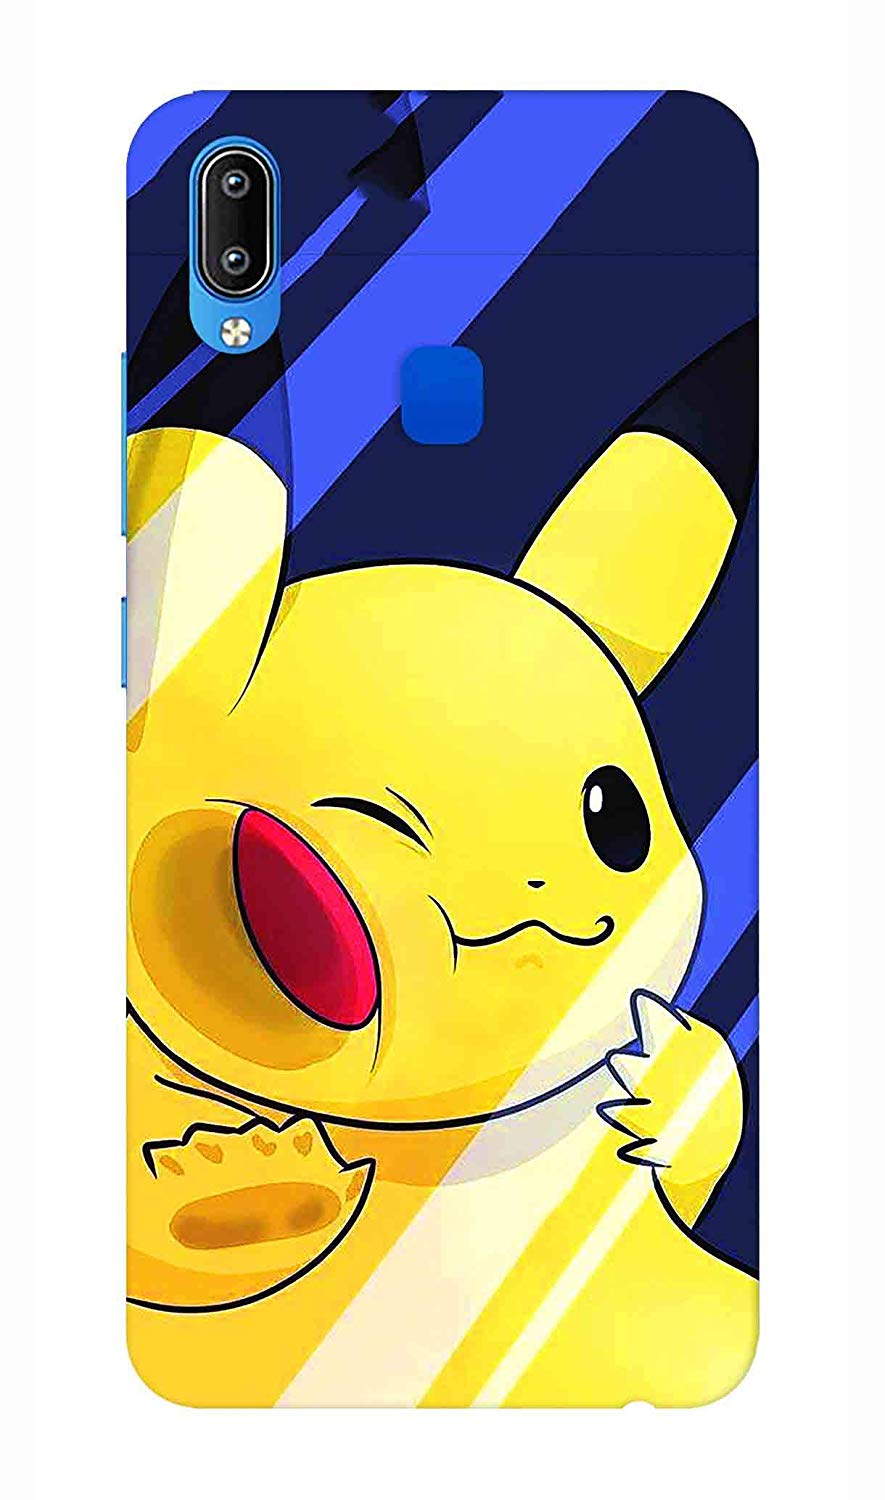 pikachu wallpaper,yellow,cartoon,mobile phone case,rabbit,smiley